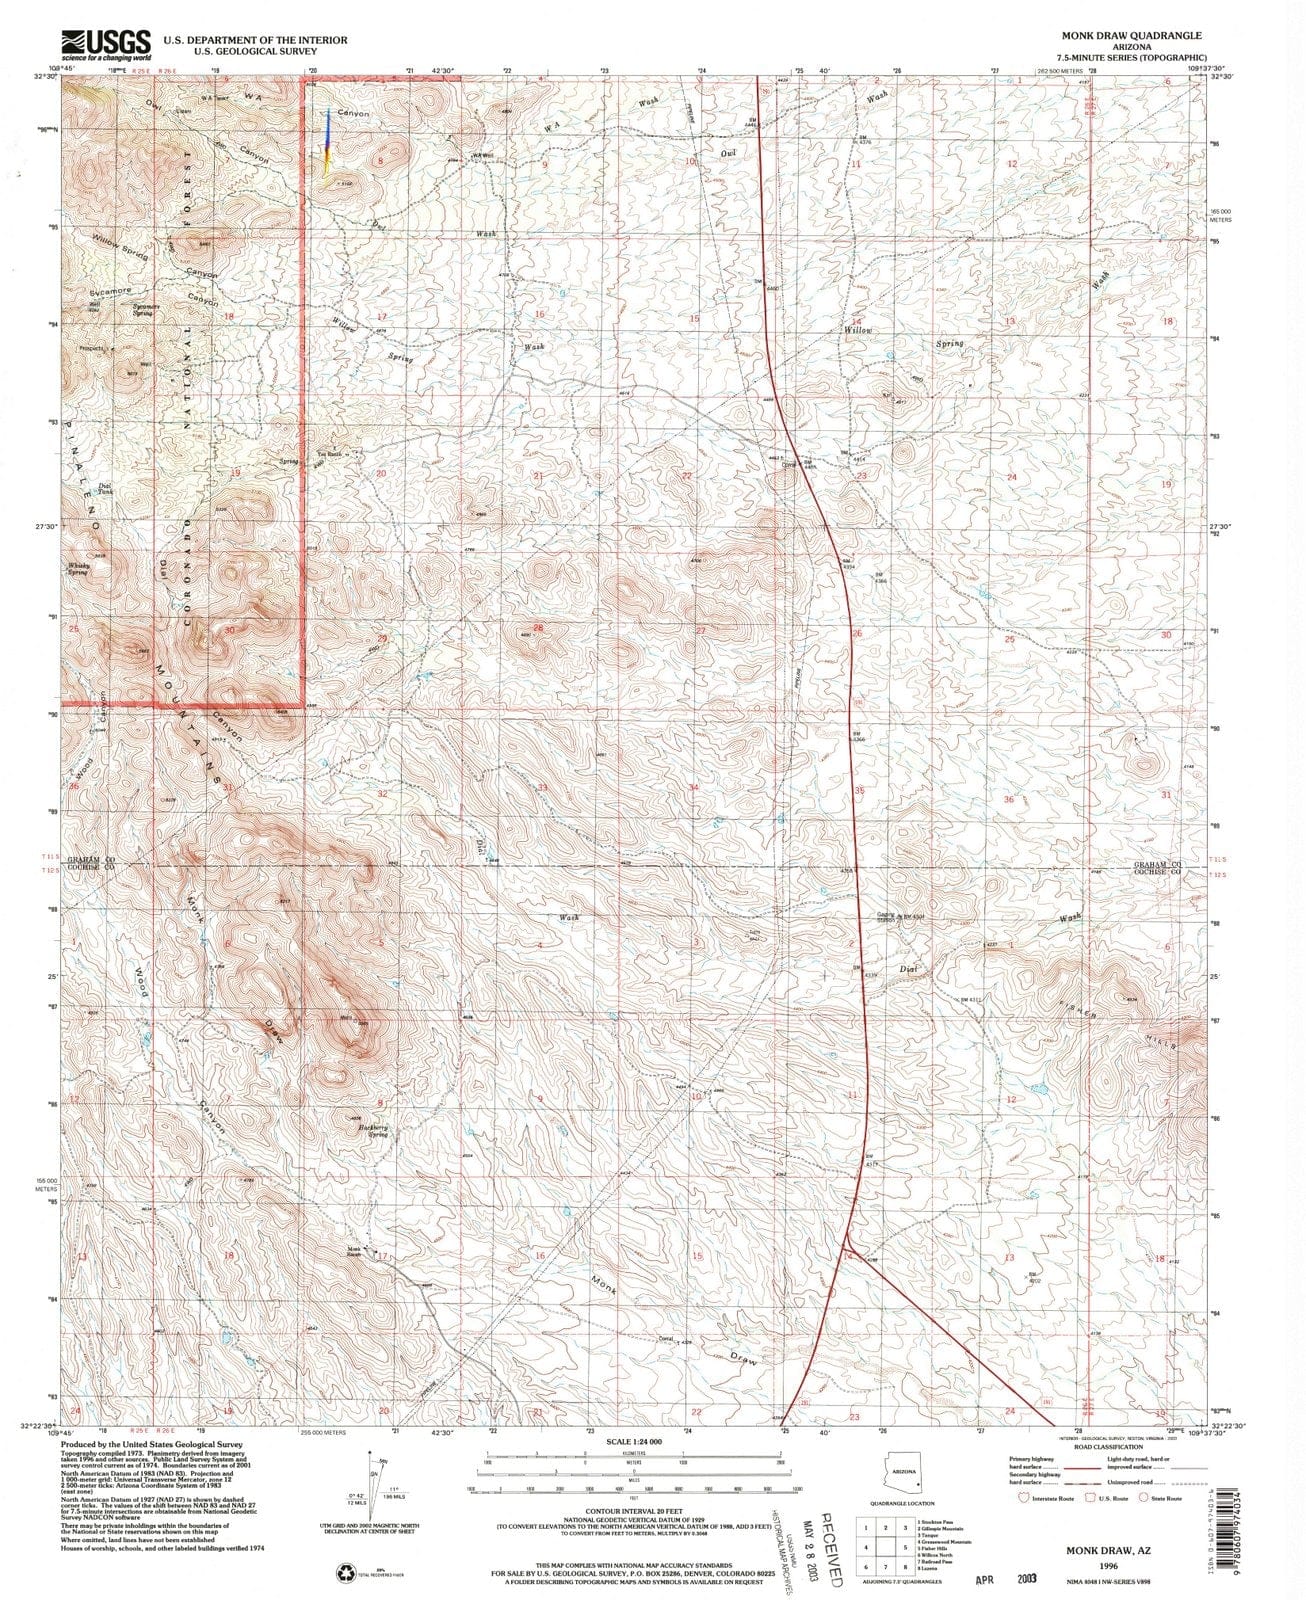 1996 Monkraw, AZ - Arizona - USGS Topographic Map